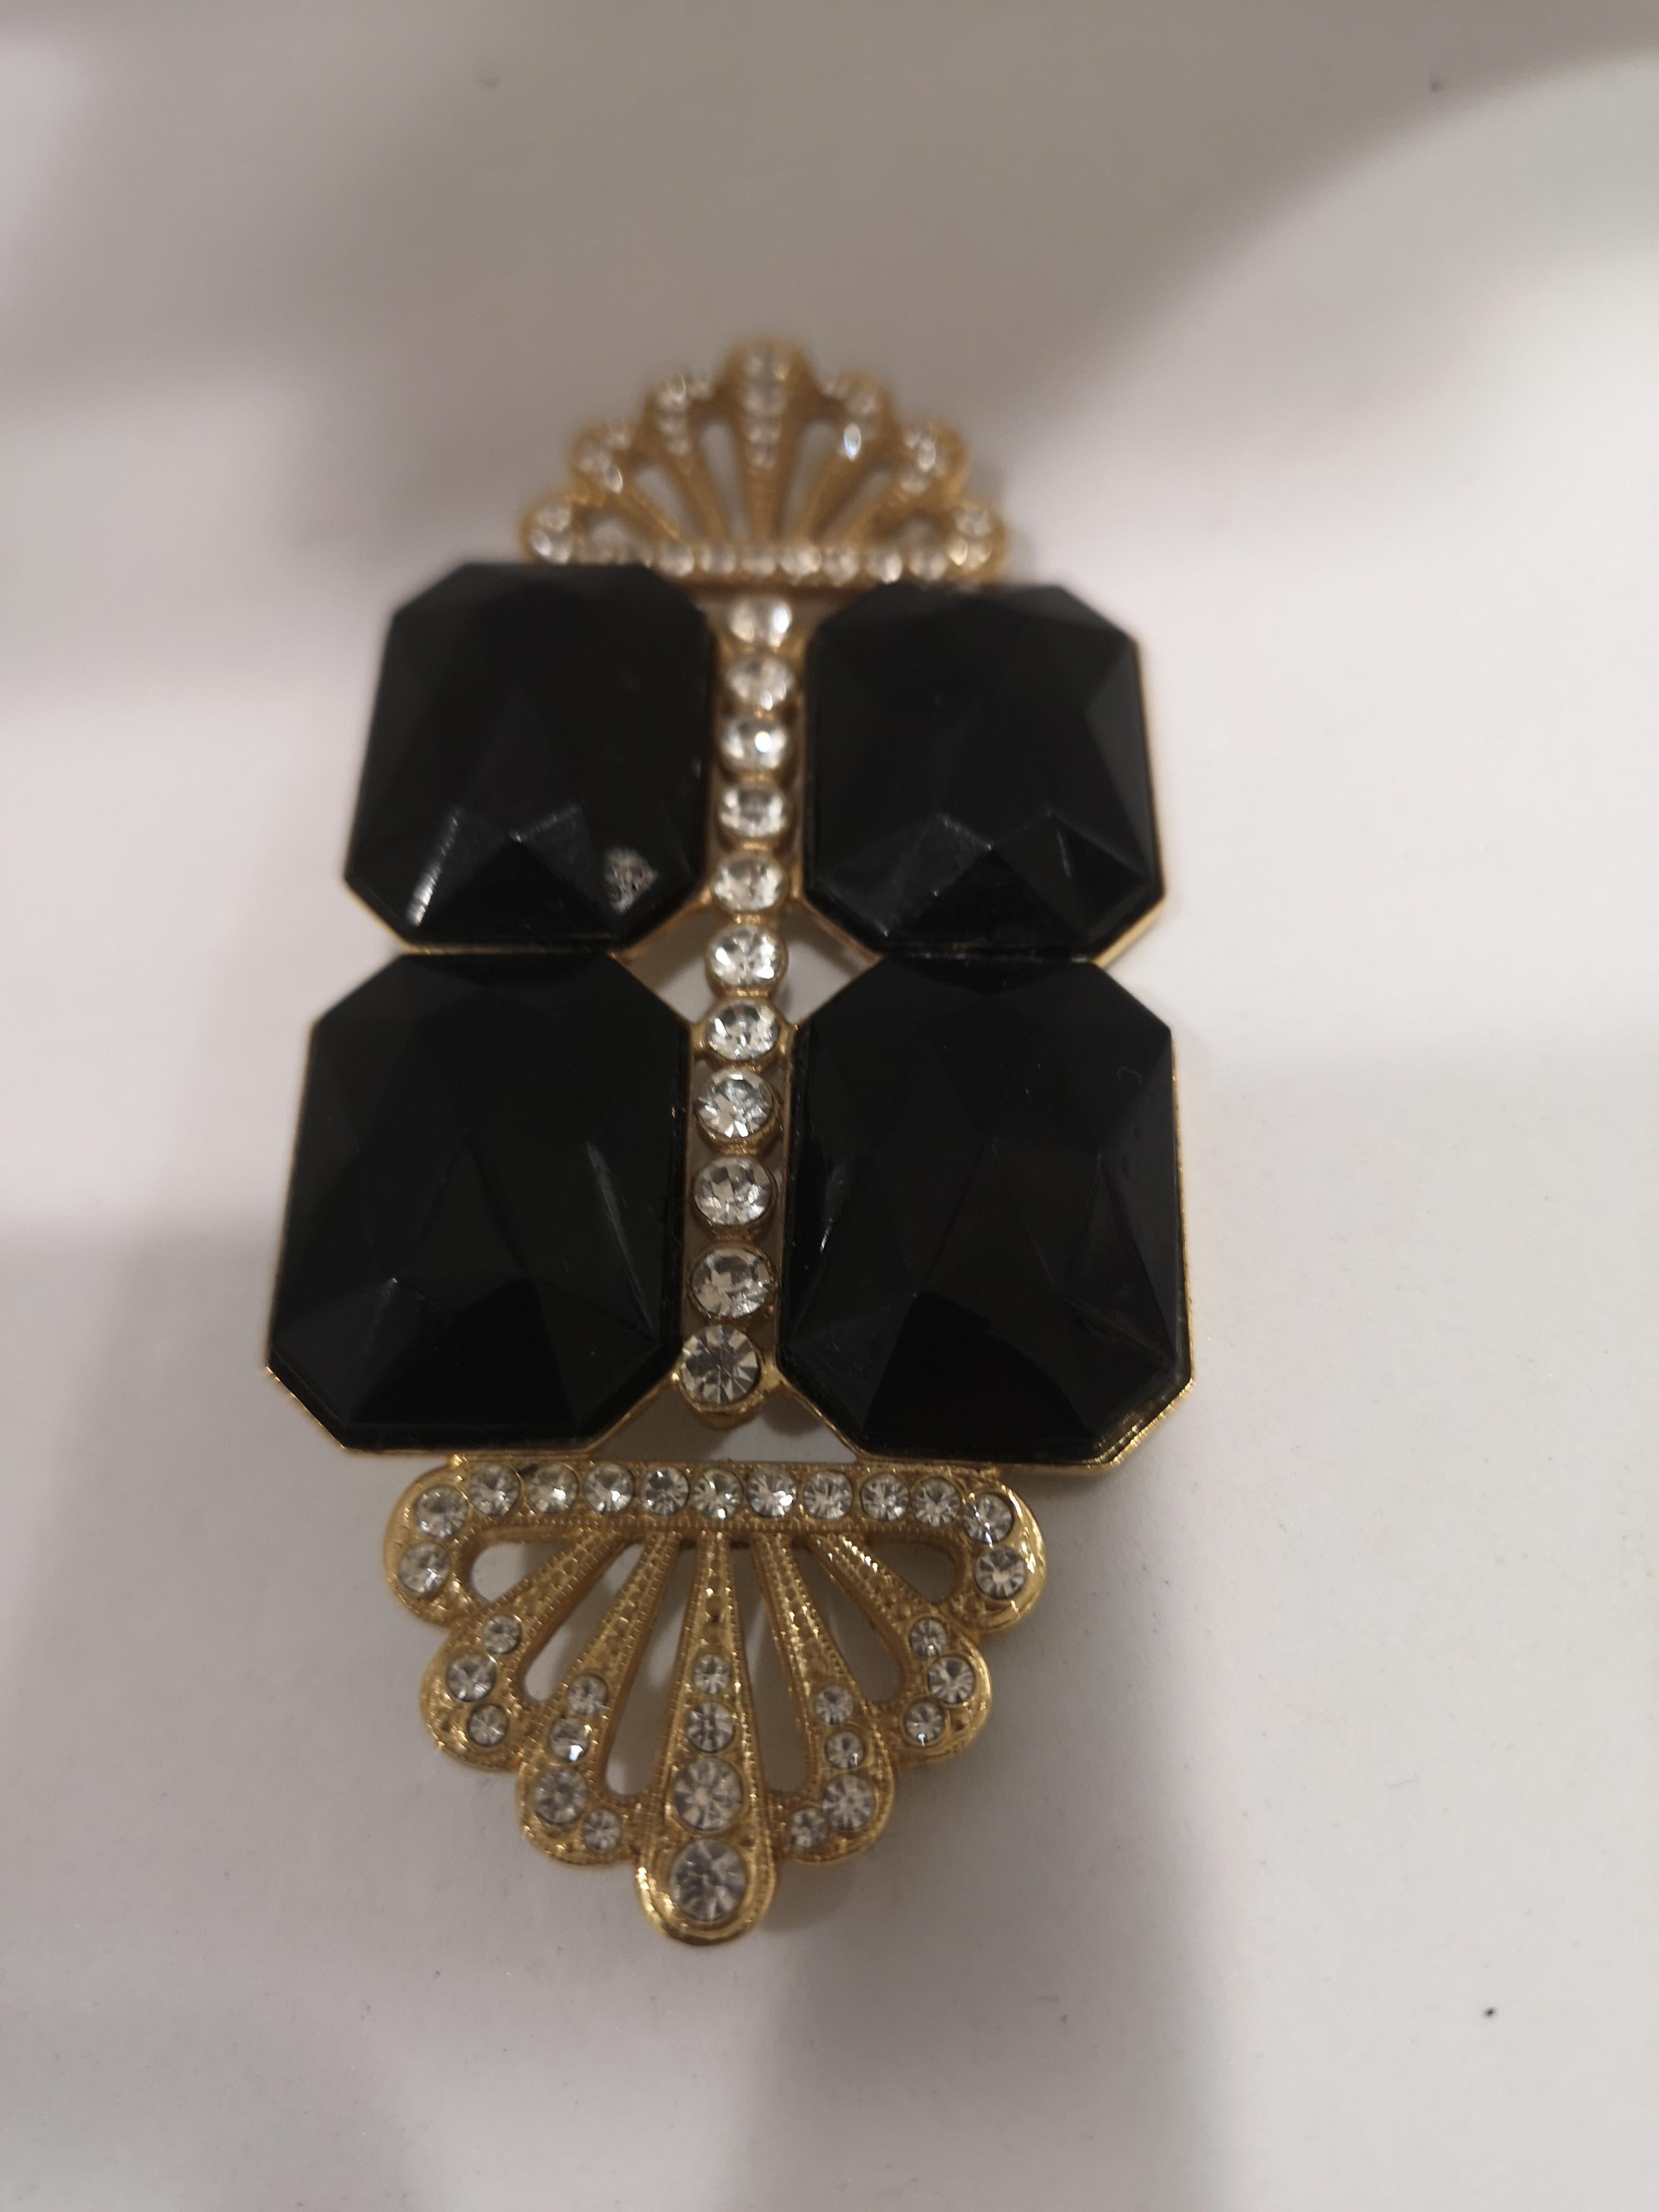 Vintage gold tone black stones brooch
9 x 4 cm